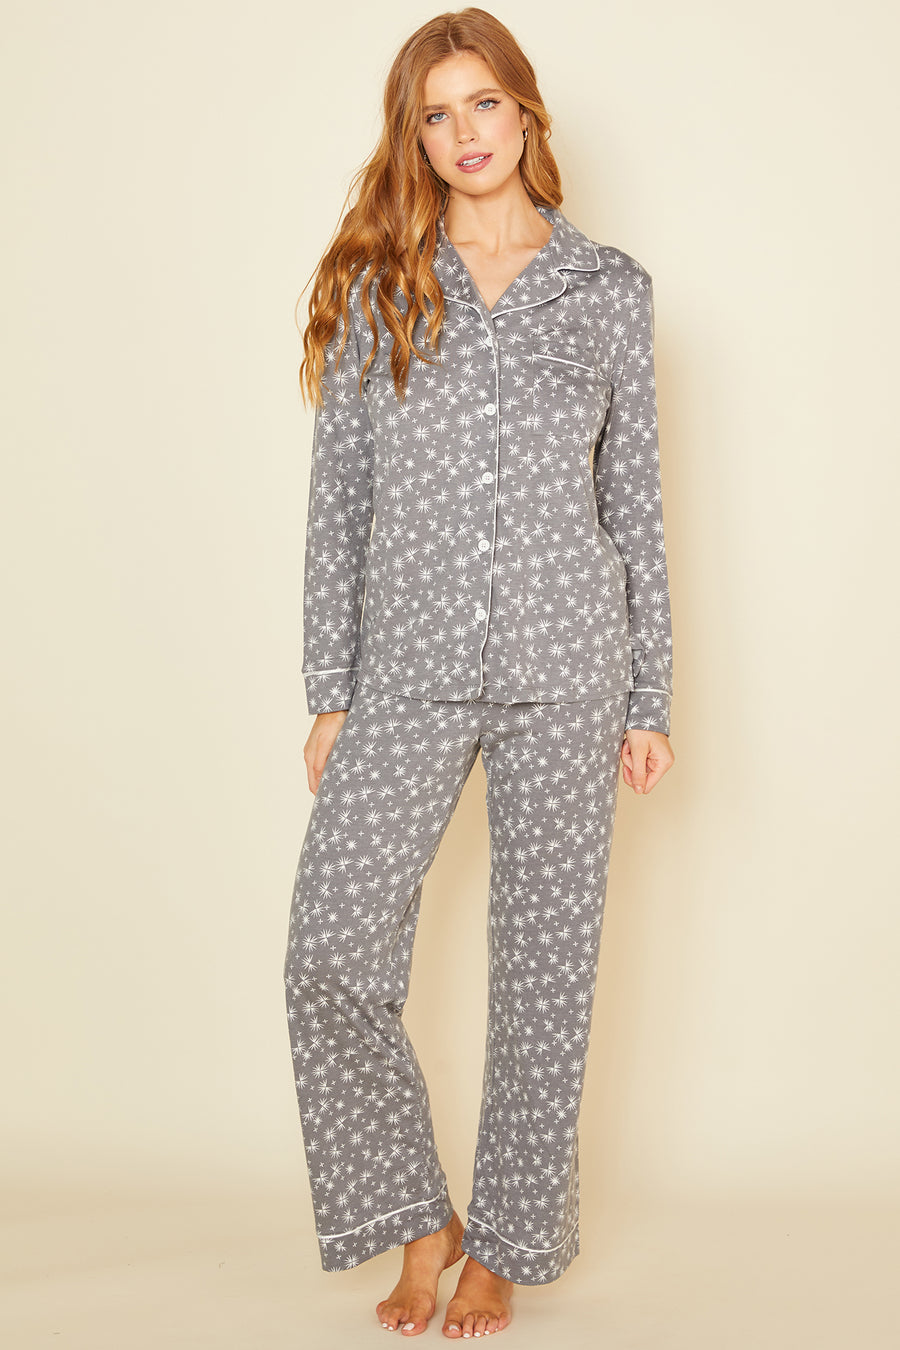 Gray Set - Bella Printed Long Sleeve Top & Pant Pajama Set